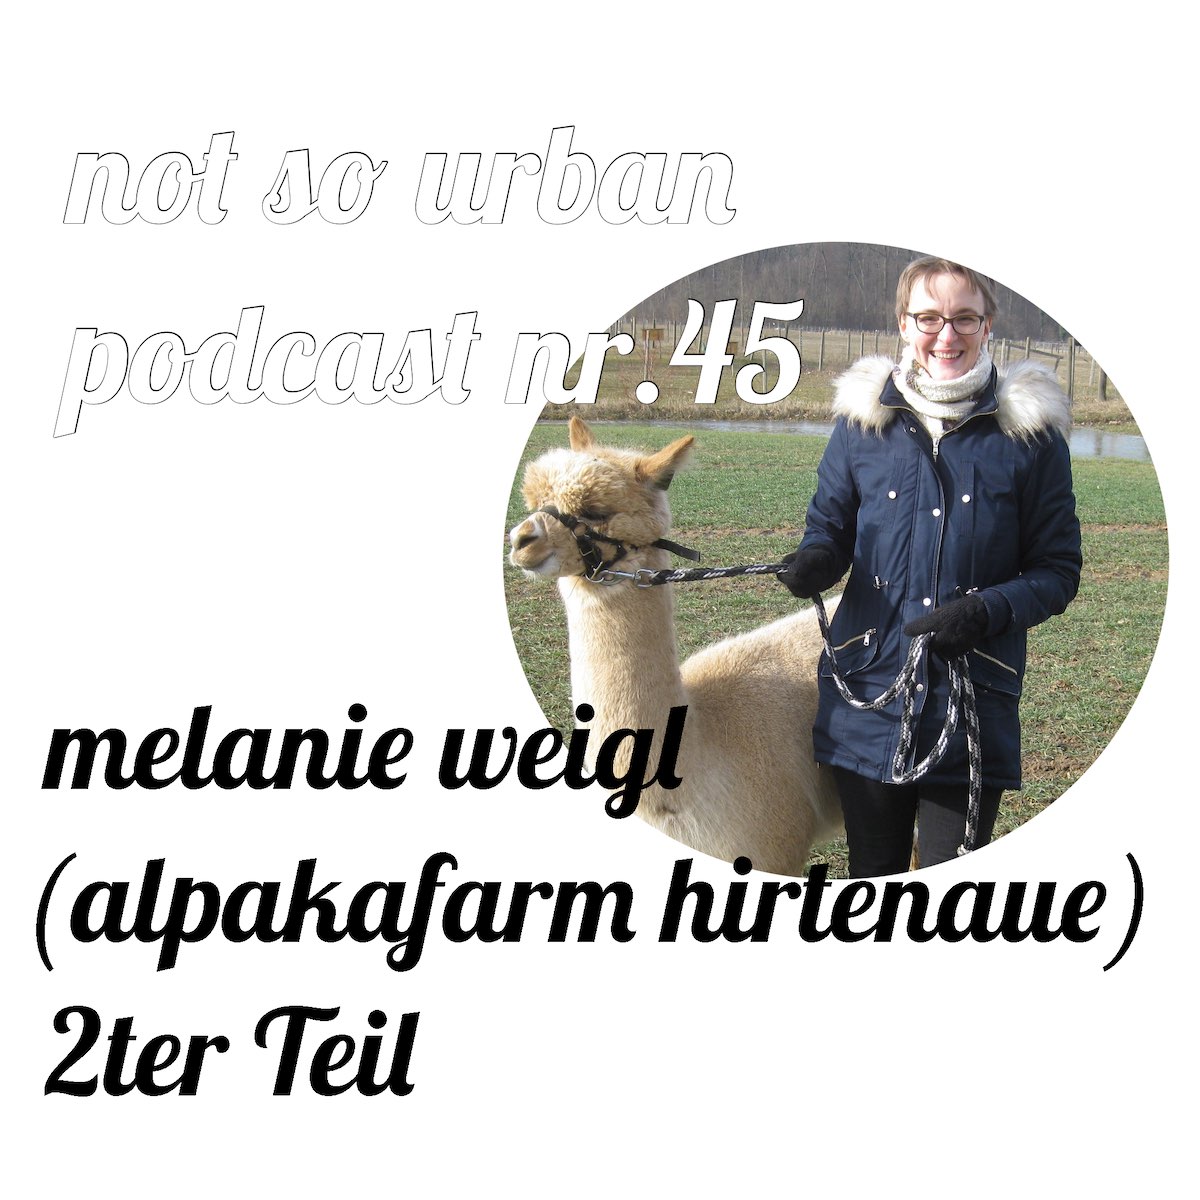 not so urban Podcast Nr. 45 mit Melanie Weigl (Alpakafarm Hirtenaue) in Ziegelhausen, Heidelberg, Cover